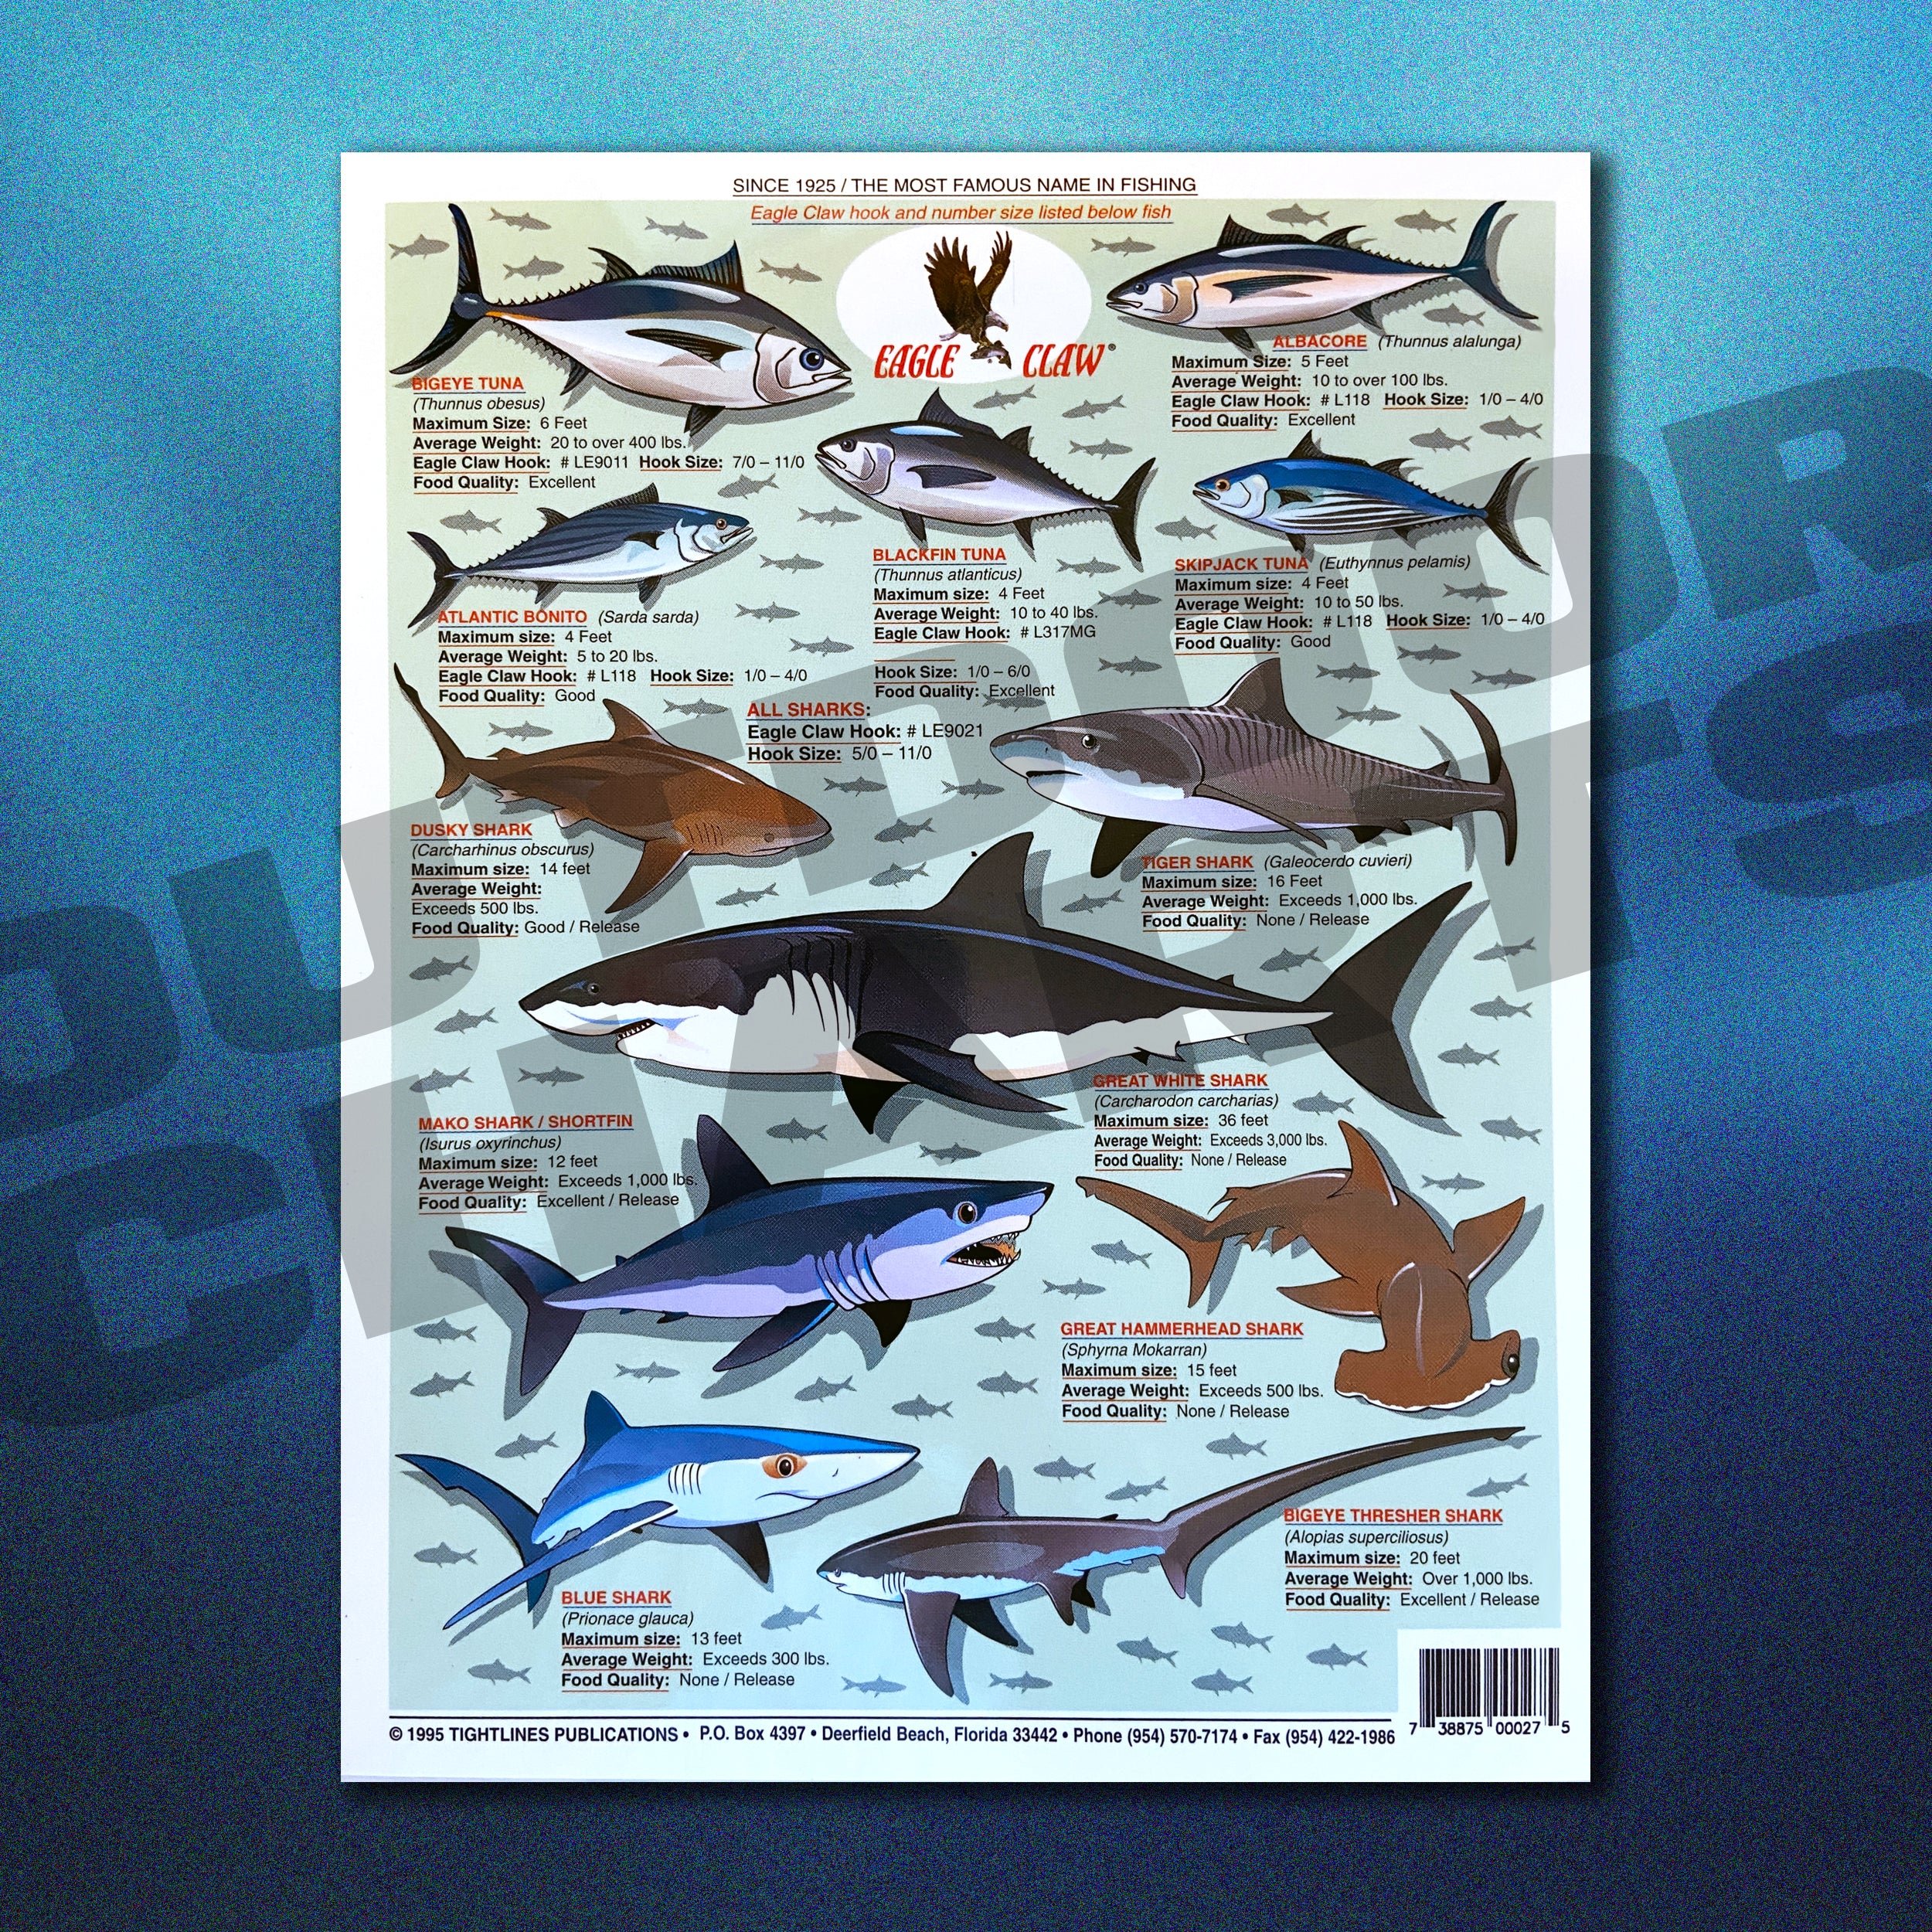 Atlantic Ocean Big Game Fish Chart #1 (Eastern United States, Bermuda, –  Outdoor Charts